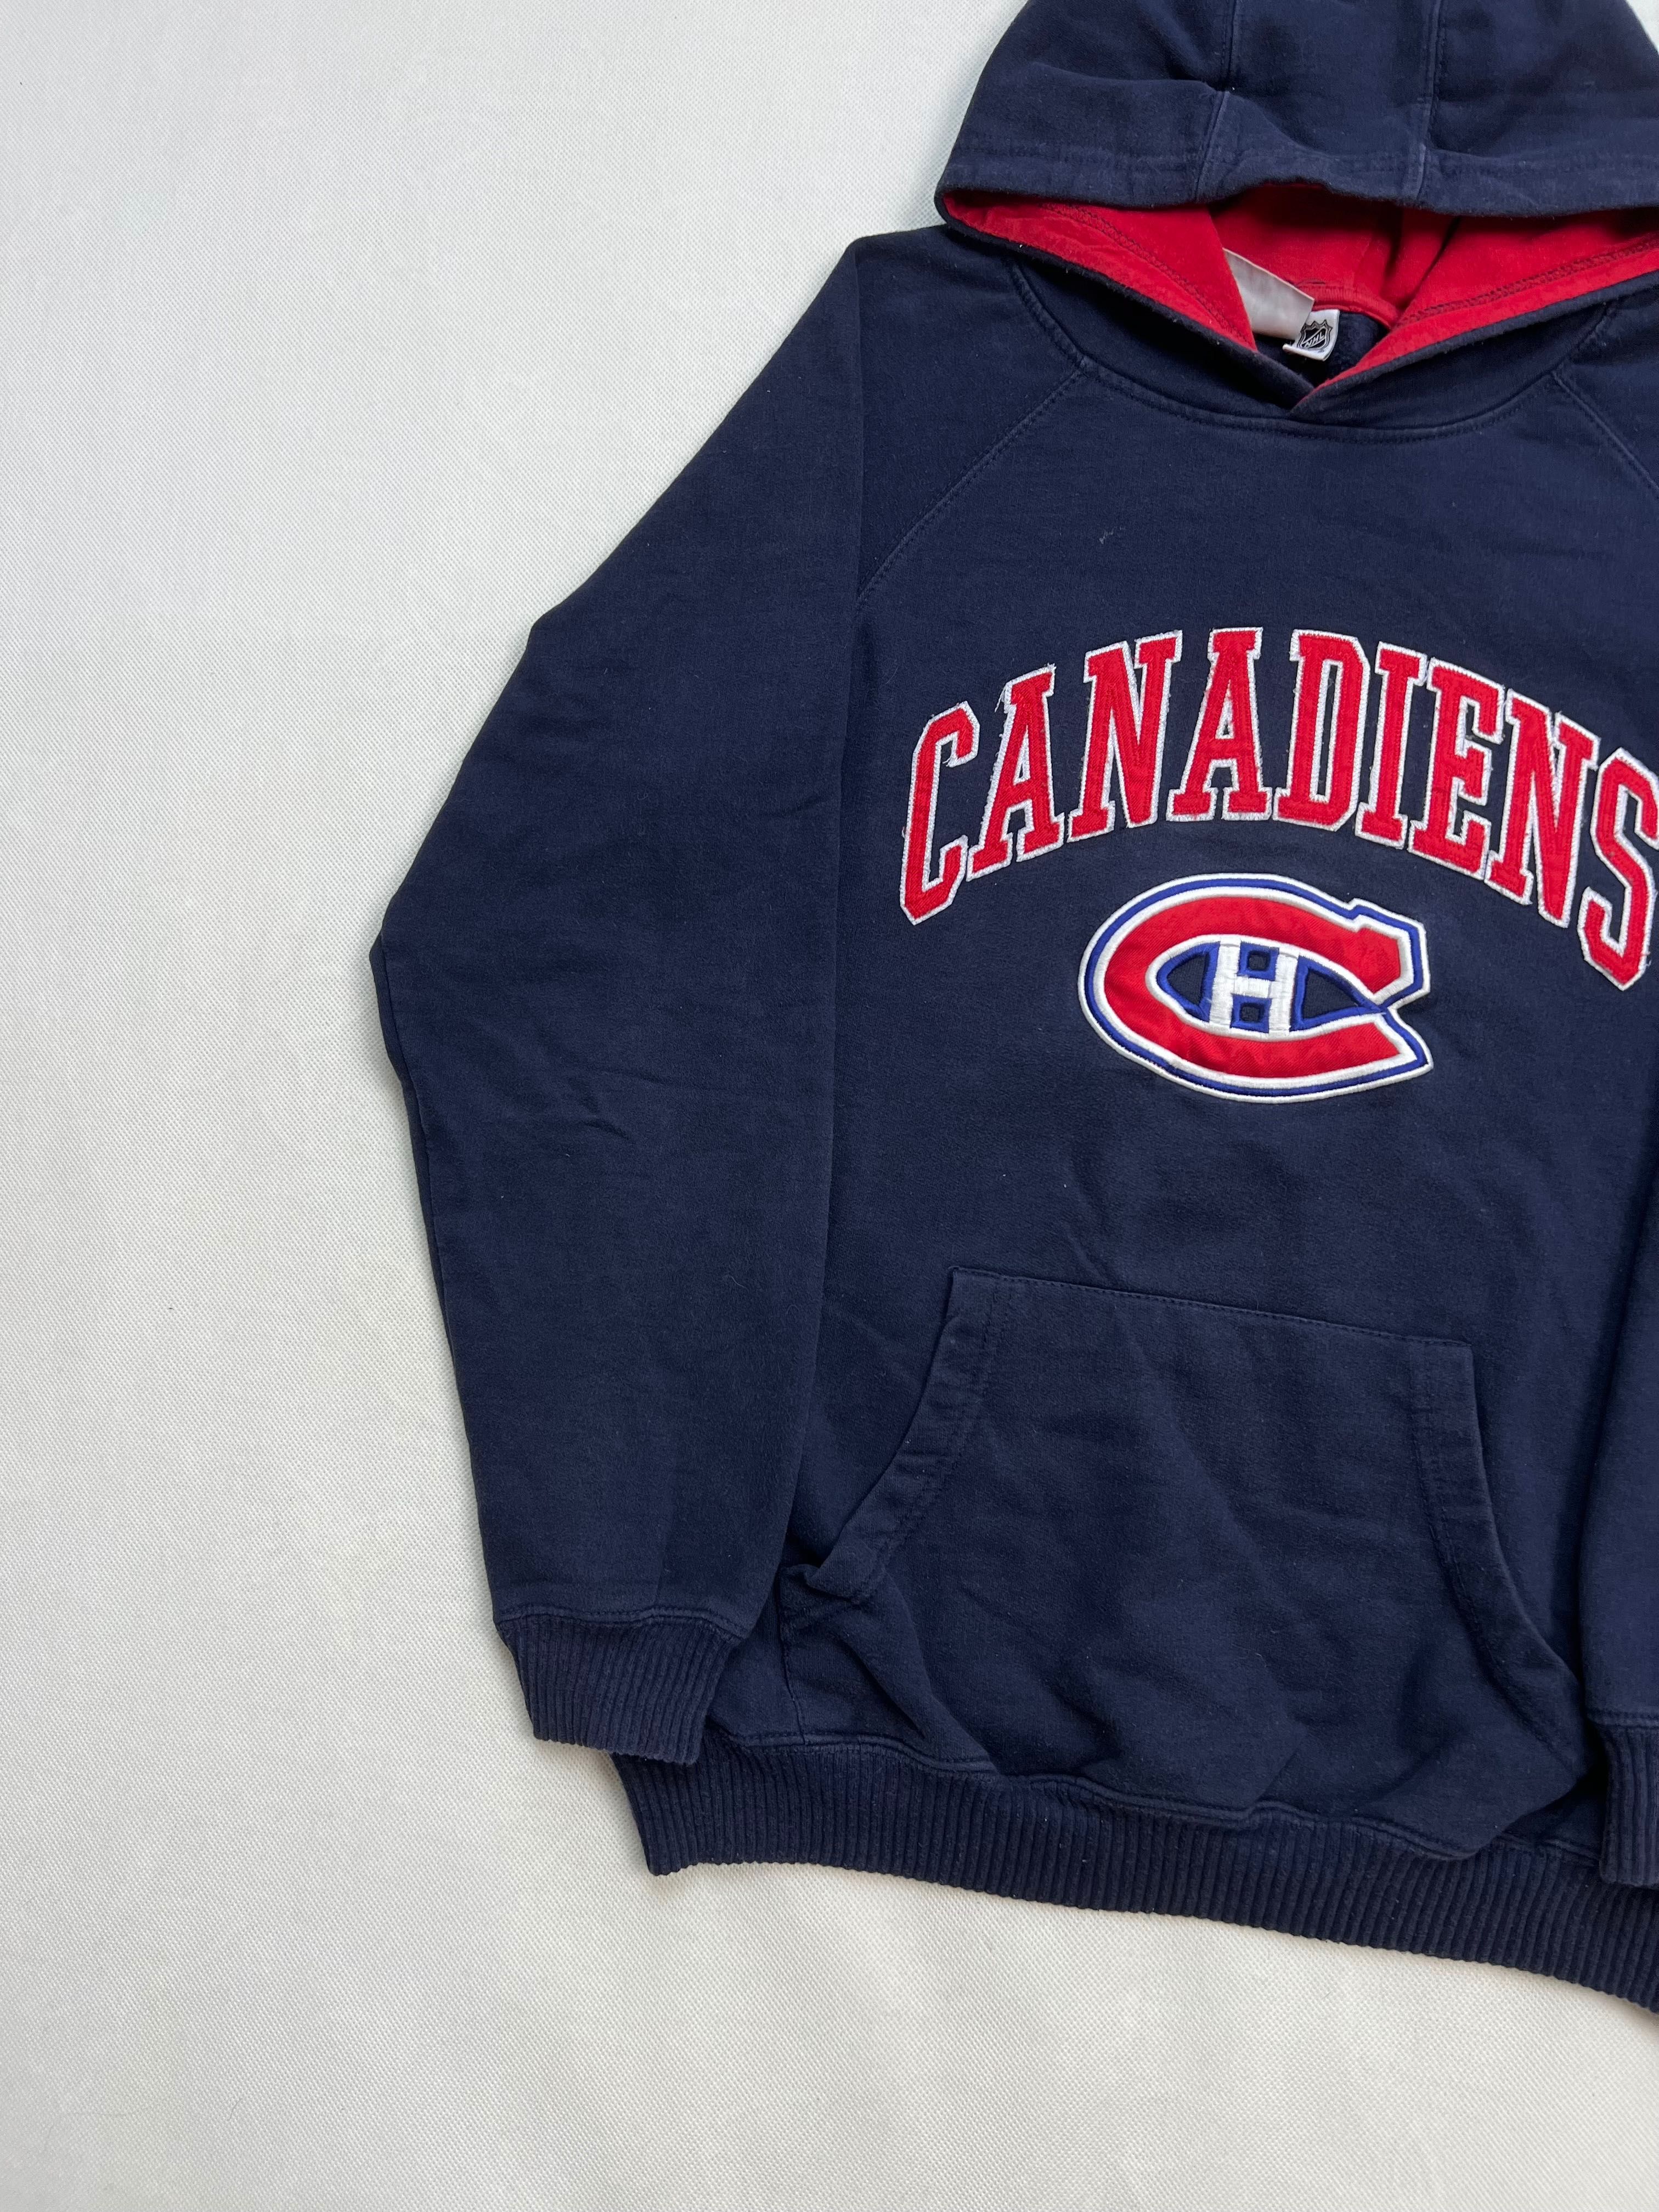 Bluza NHL Canadiens vintage 90’s hockey